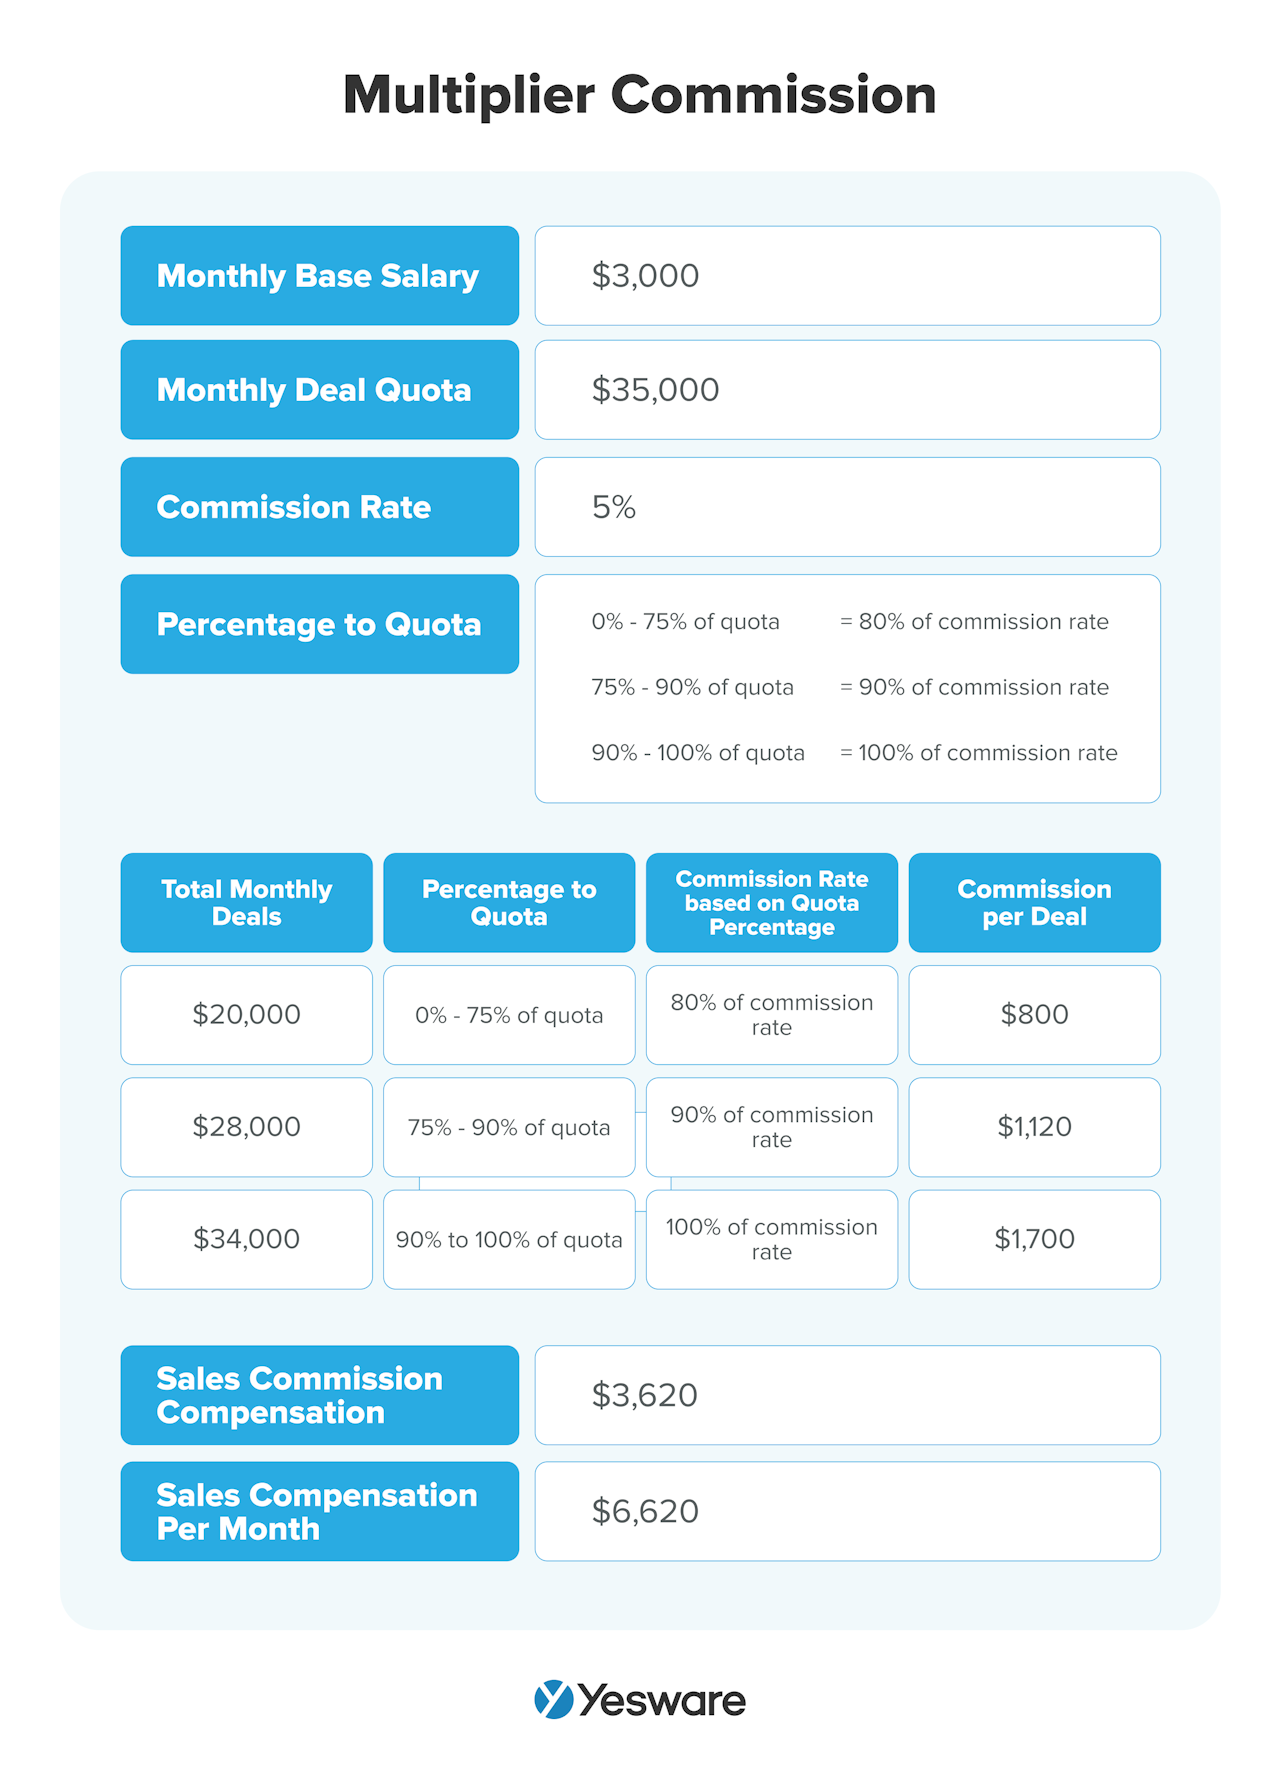 Sales Commission Structure: Multiplier Commission